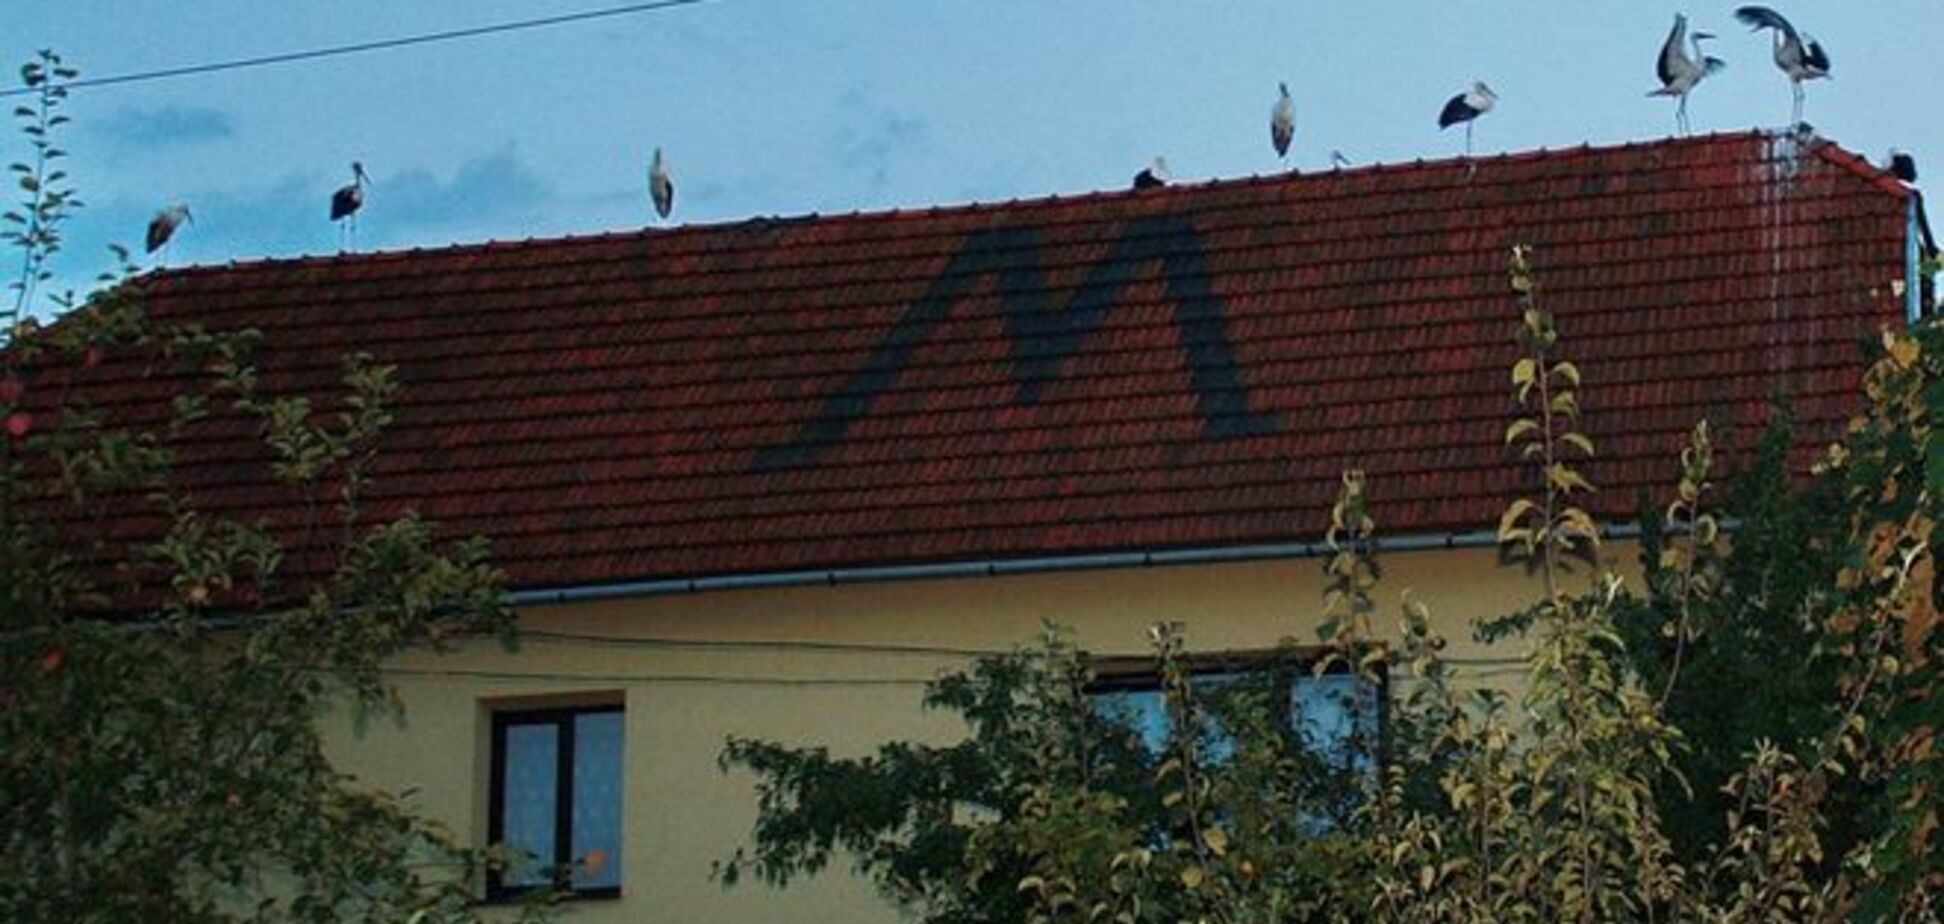 15 аистов село на крышу дома детского врача 